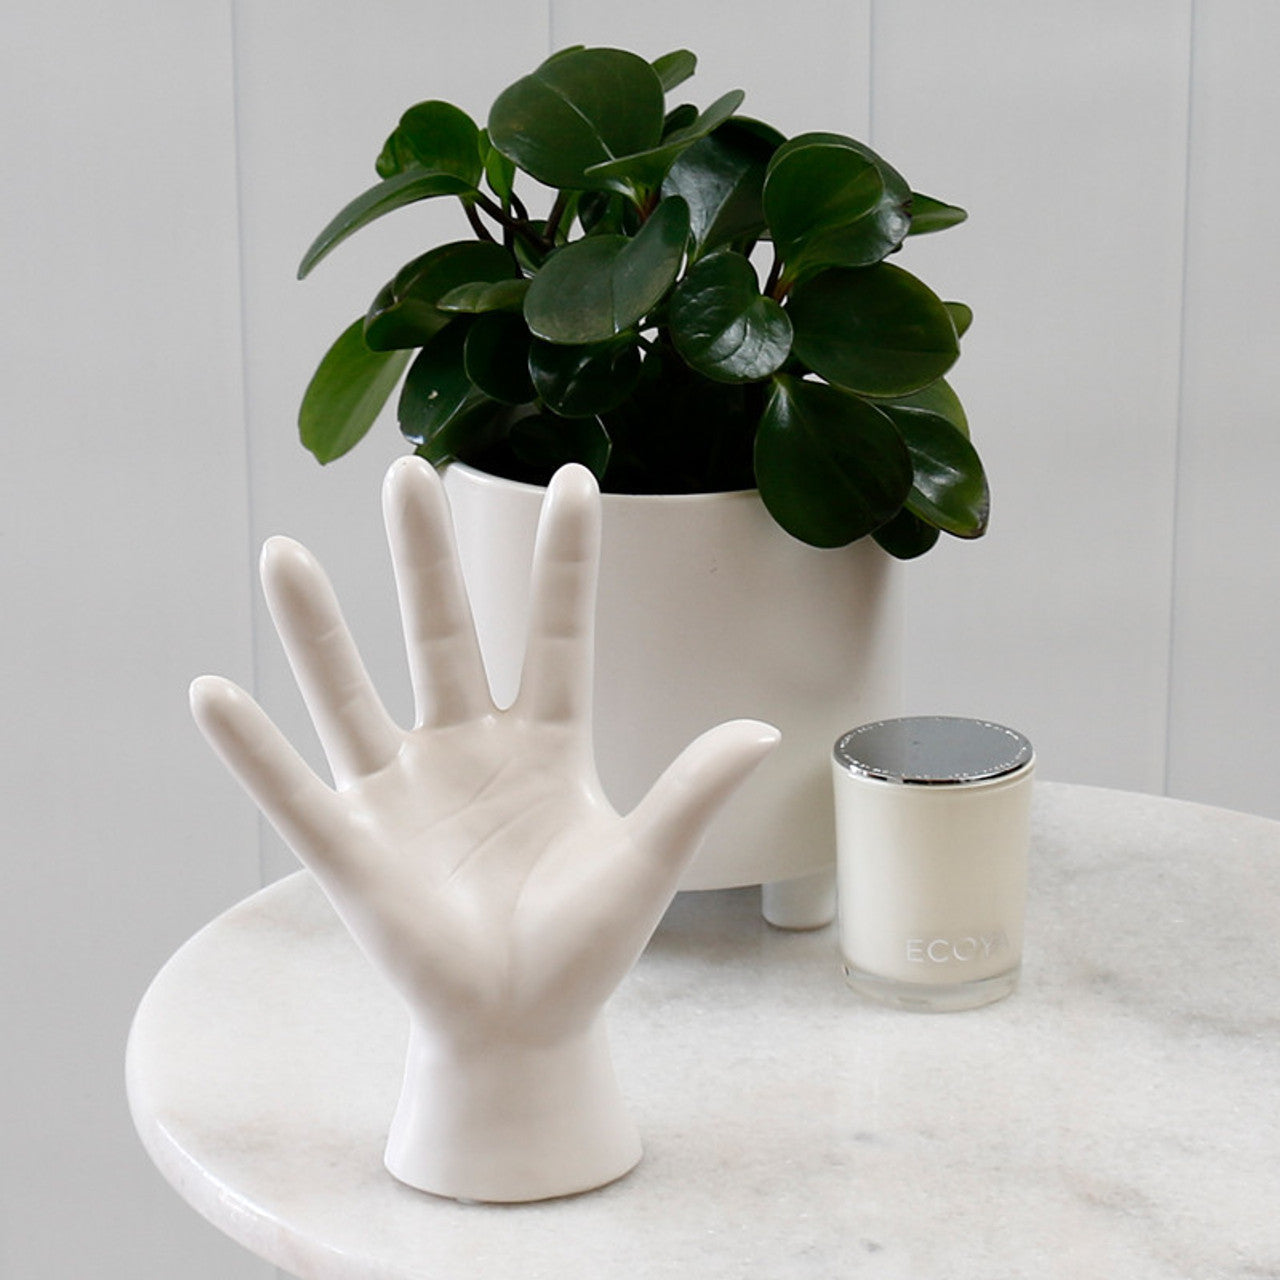 Waving Hand Ceramic Decor